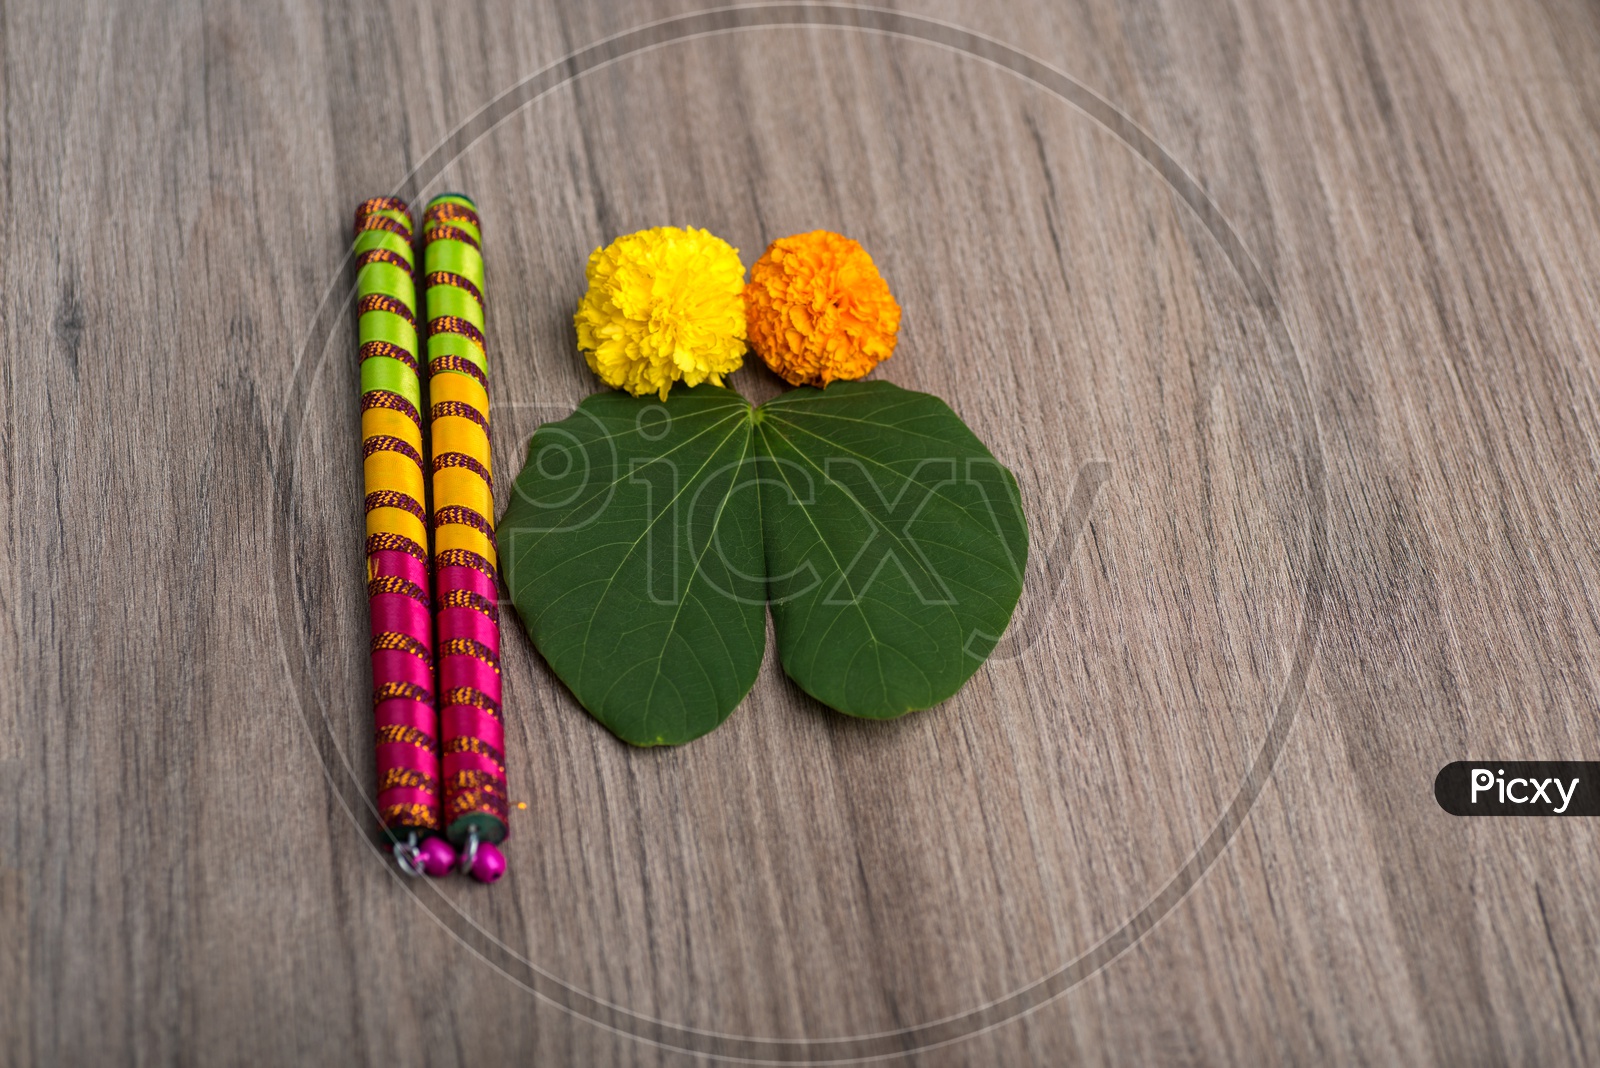 Indian Festival Dussera or Navrathri Symbolic Representation With Dandiya Sticks , Mari Gold Flowers And Golden Leaf ( Bauhinia Racemosa ) On an Isolated Wooden Background